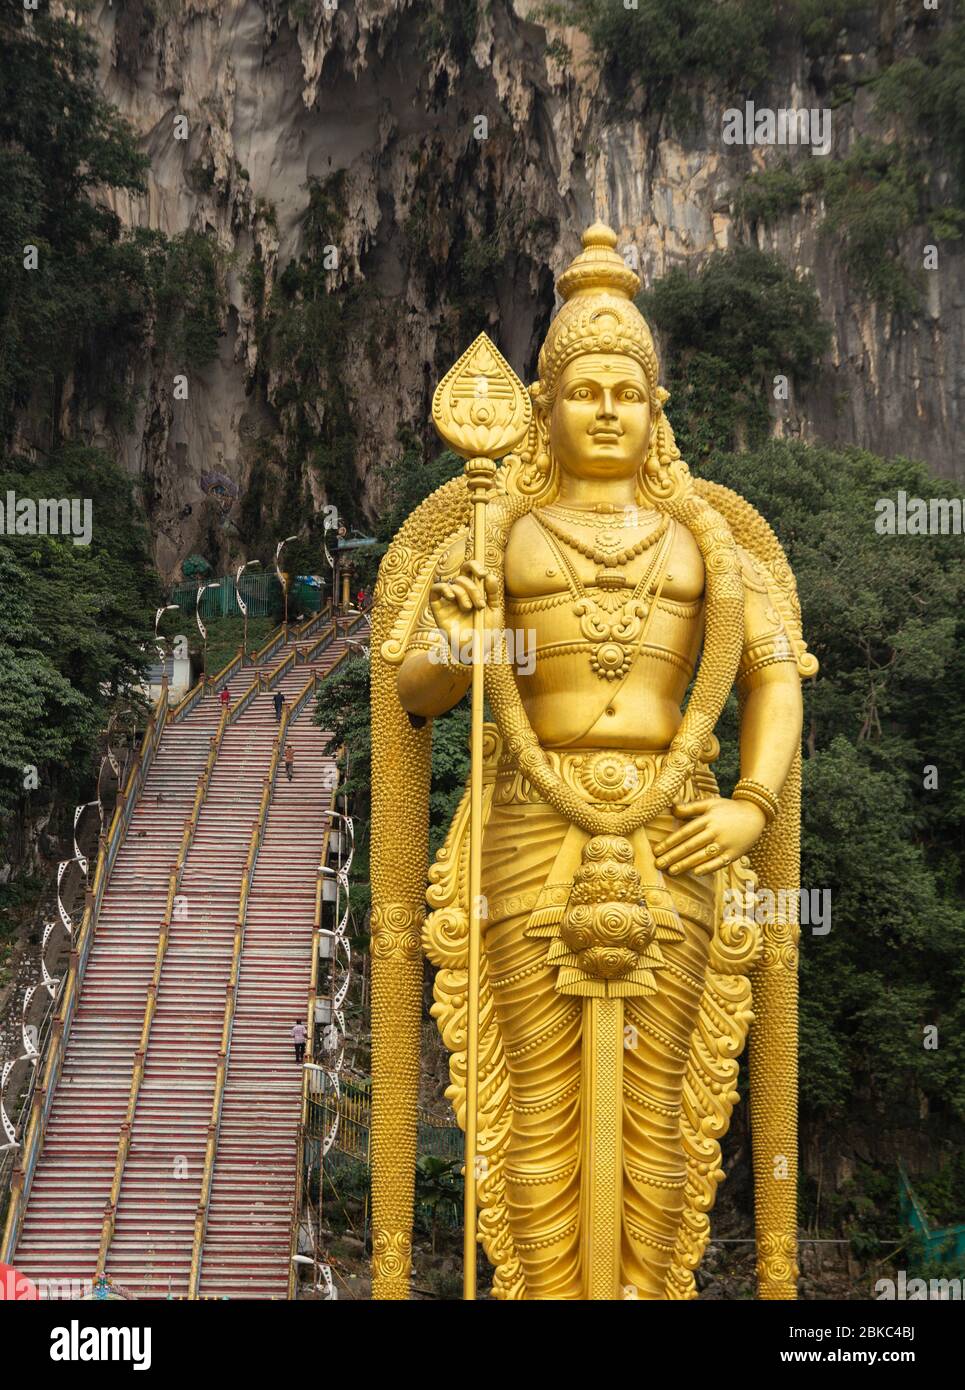 huge gold statue in Batu caves, Malaysia Stock Photo